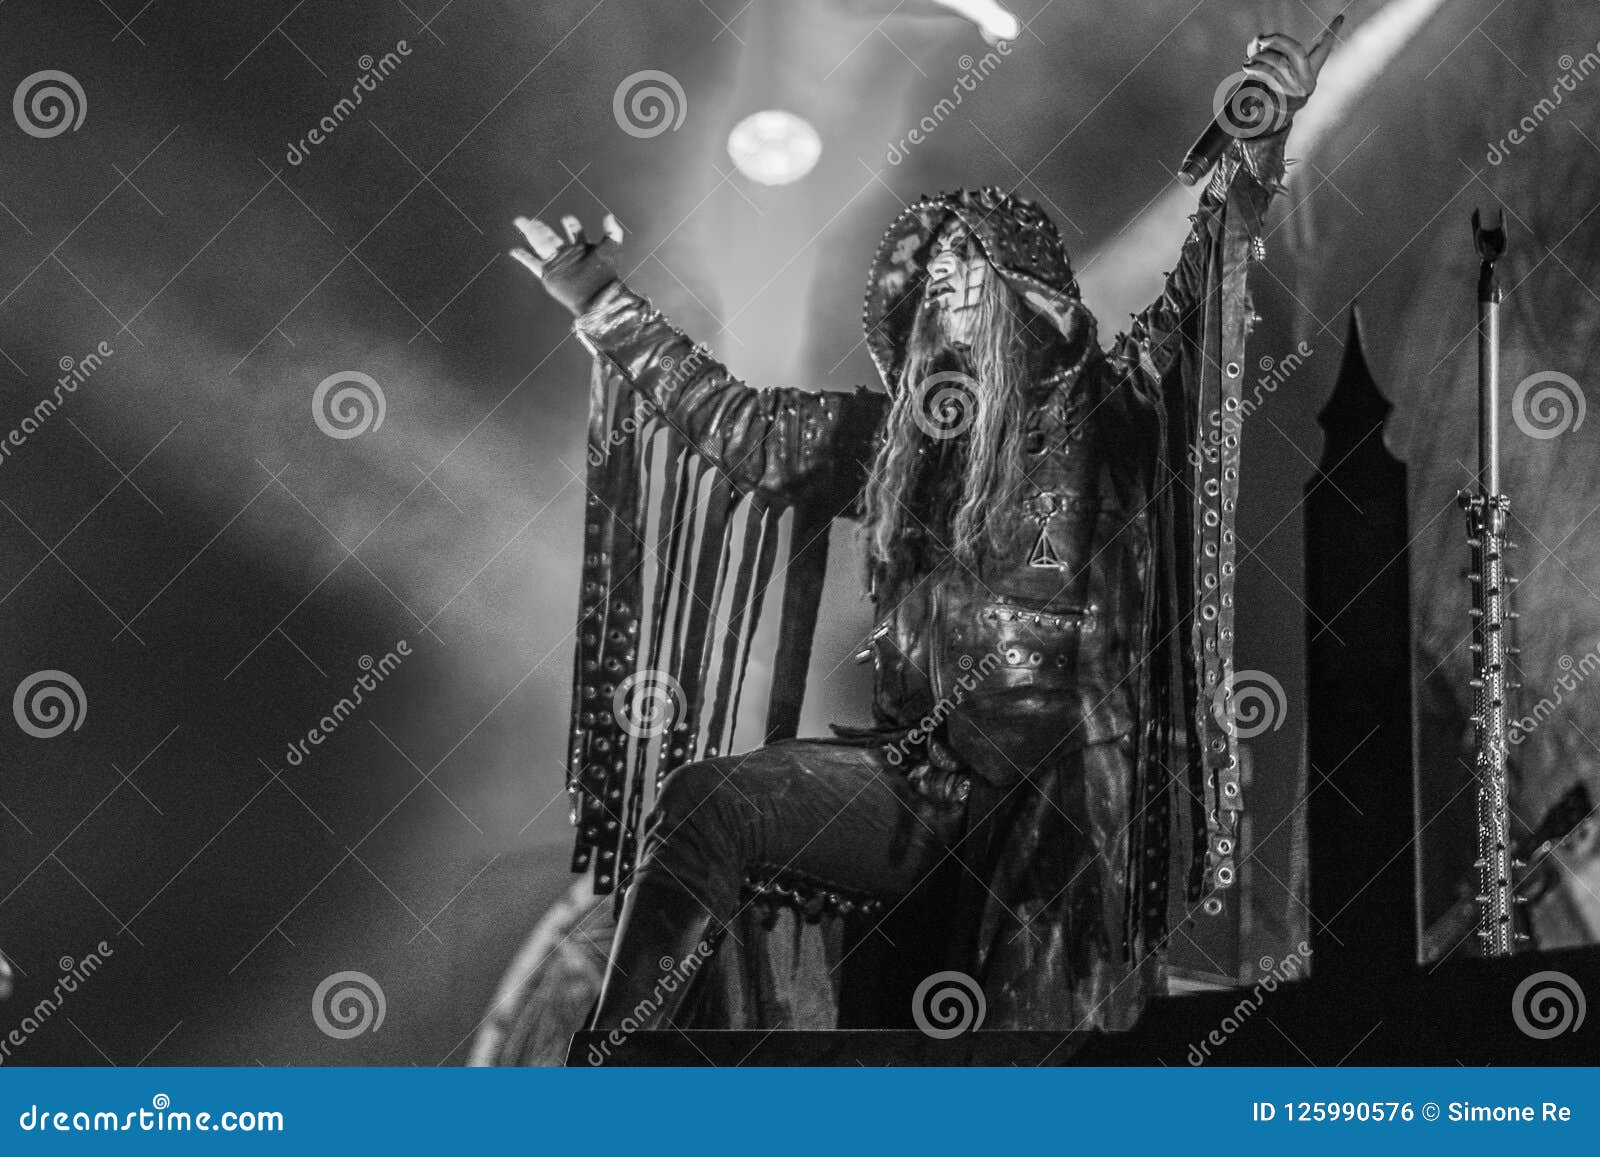 Dimmu Borgir, Shagrath , Live Concert 2018 Hellfest Editorial Photo - Image  of portrait, dark: 125007801